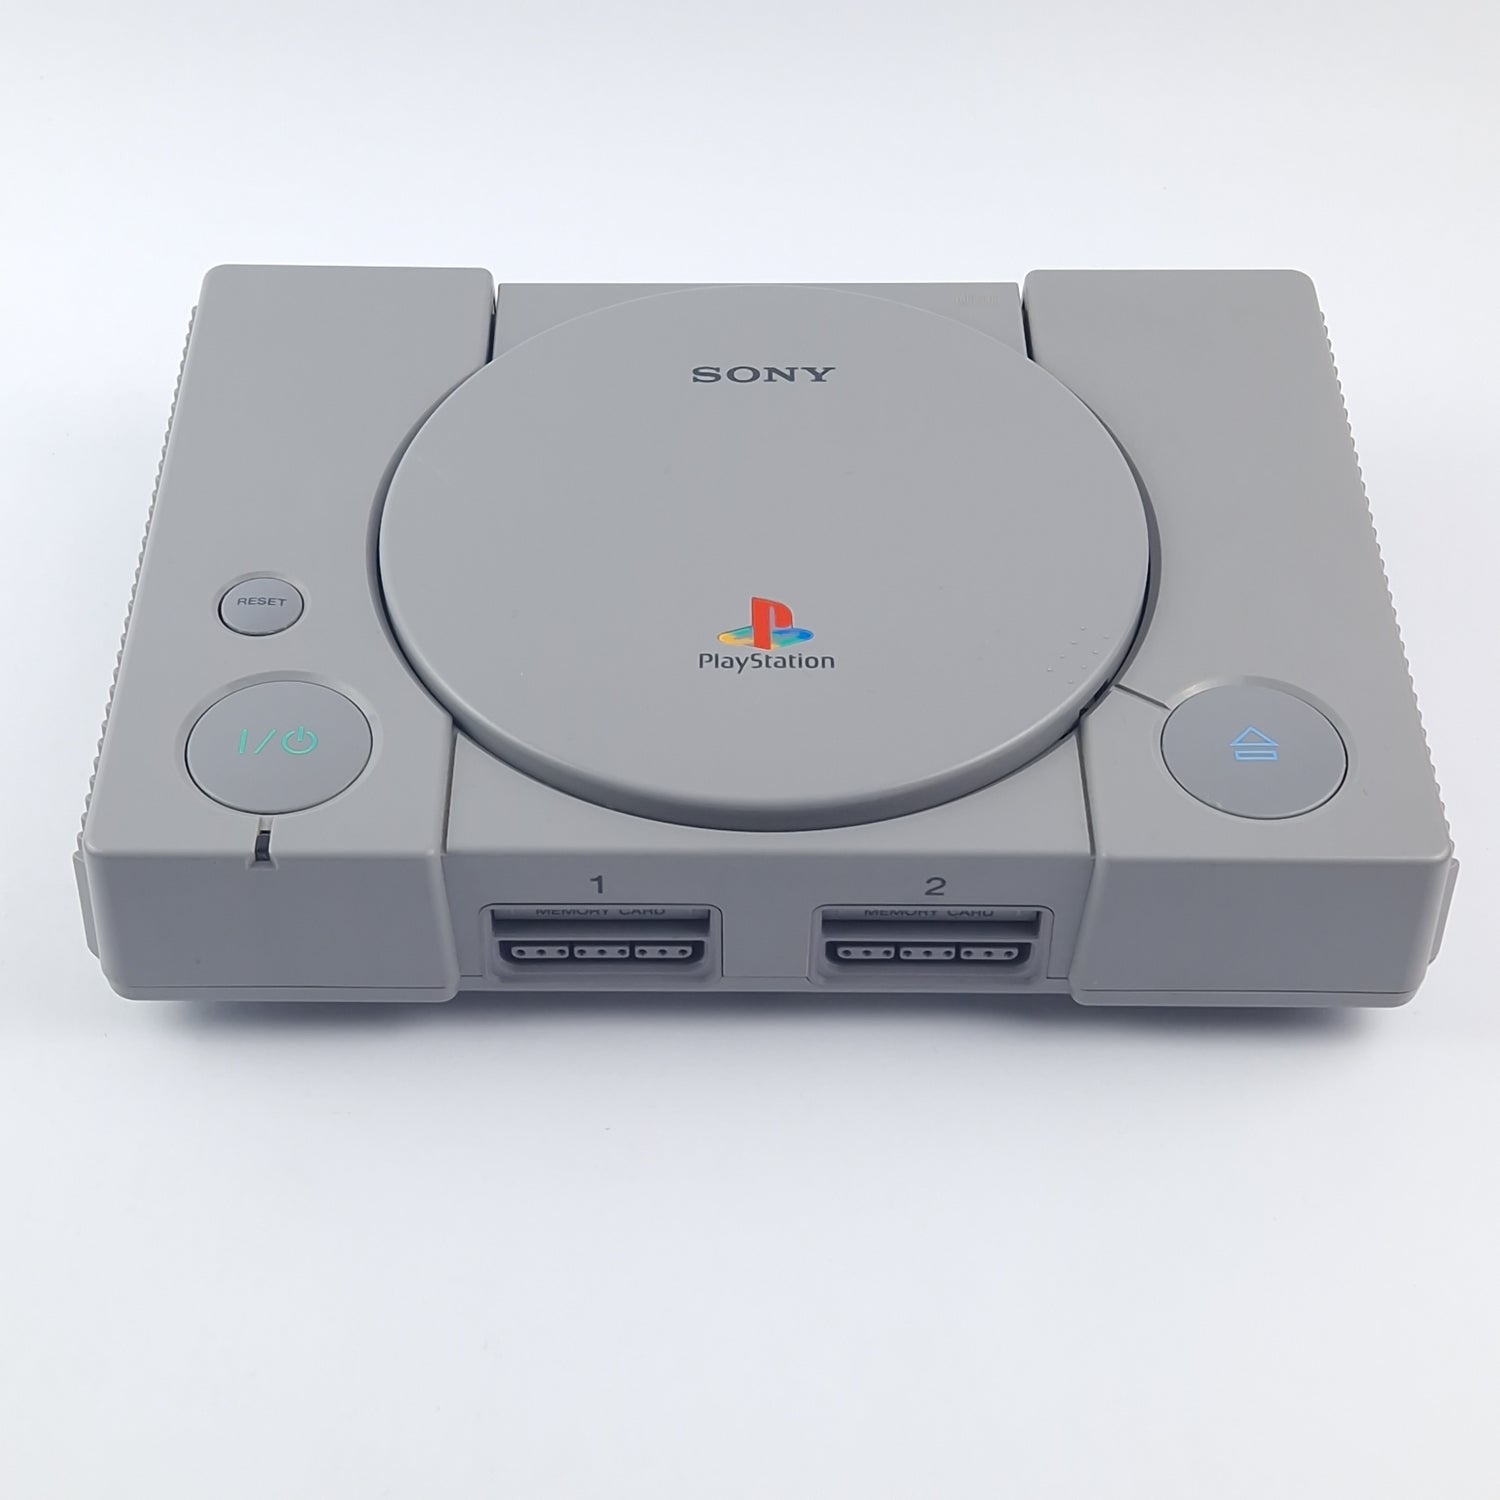 Playstation 1 Konsole mit Controller und Anschlusskabeln - Sony PS1 Console PAL